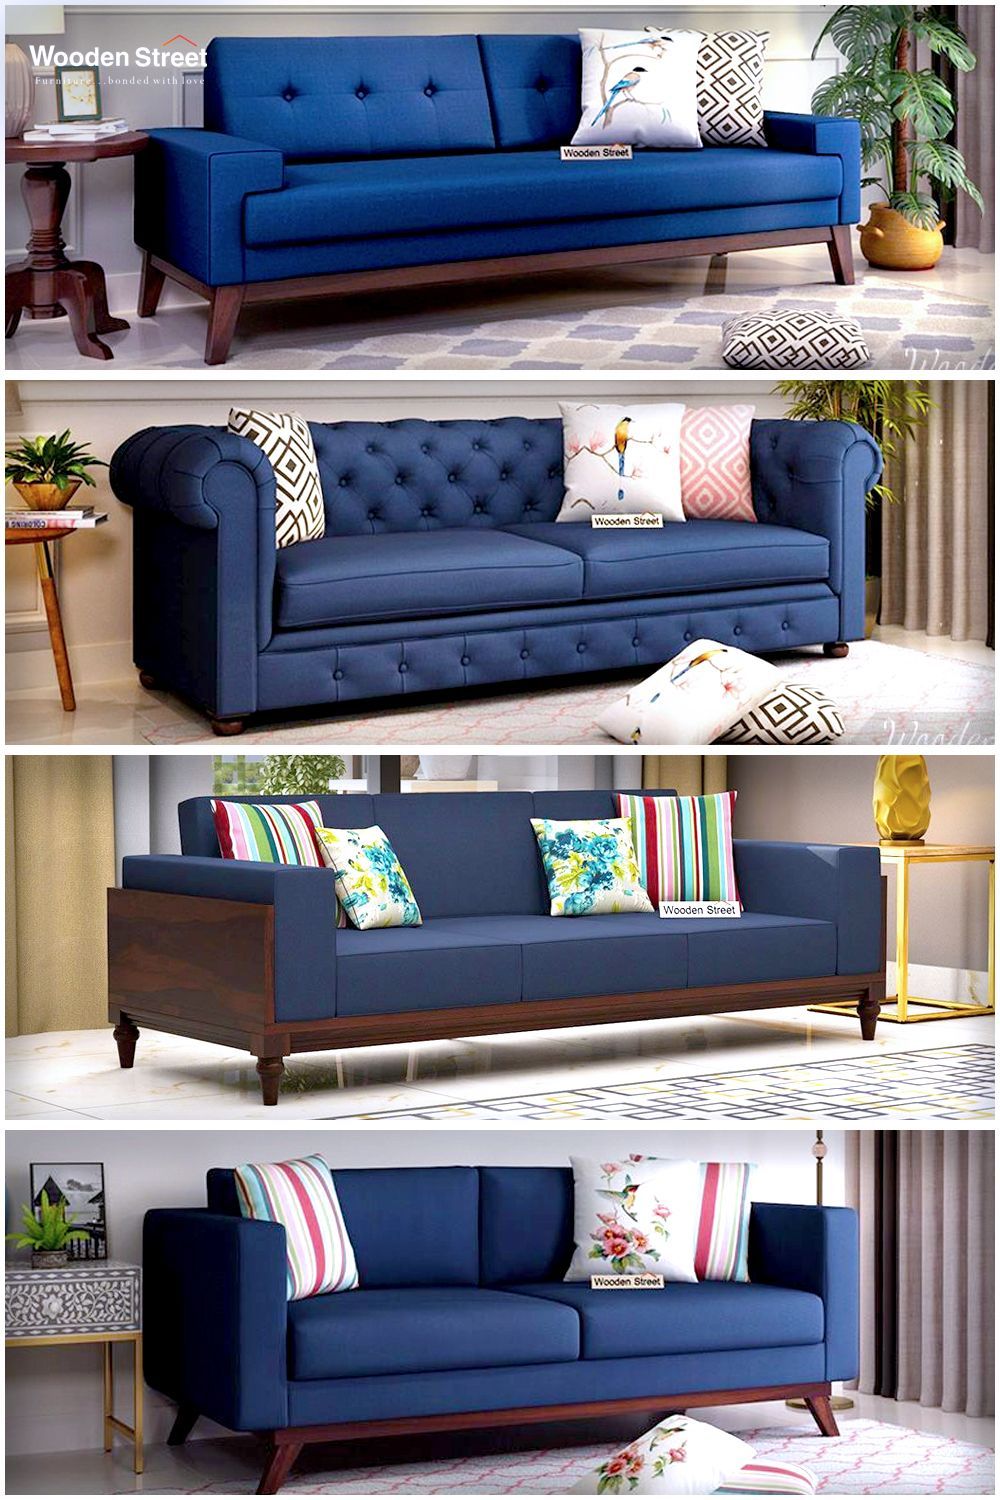 3 Seater Sofa | Wooden Sofa Designs, Sofa Bed Design, Sofa Table Decor Inside Modern 3 Seater Sofas (View 13 of 15)